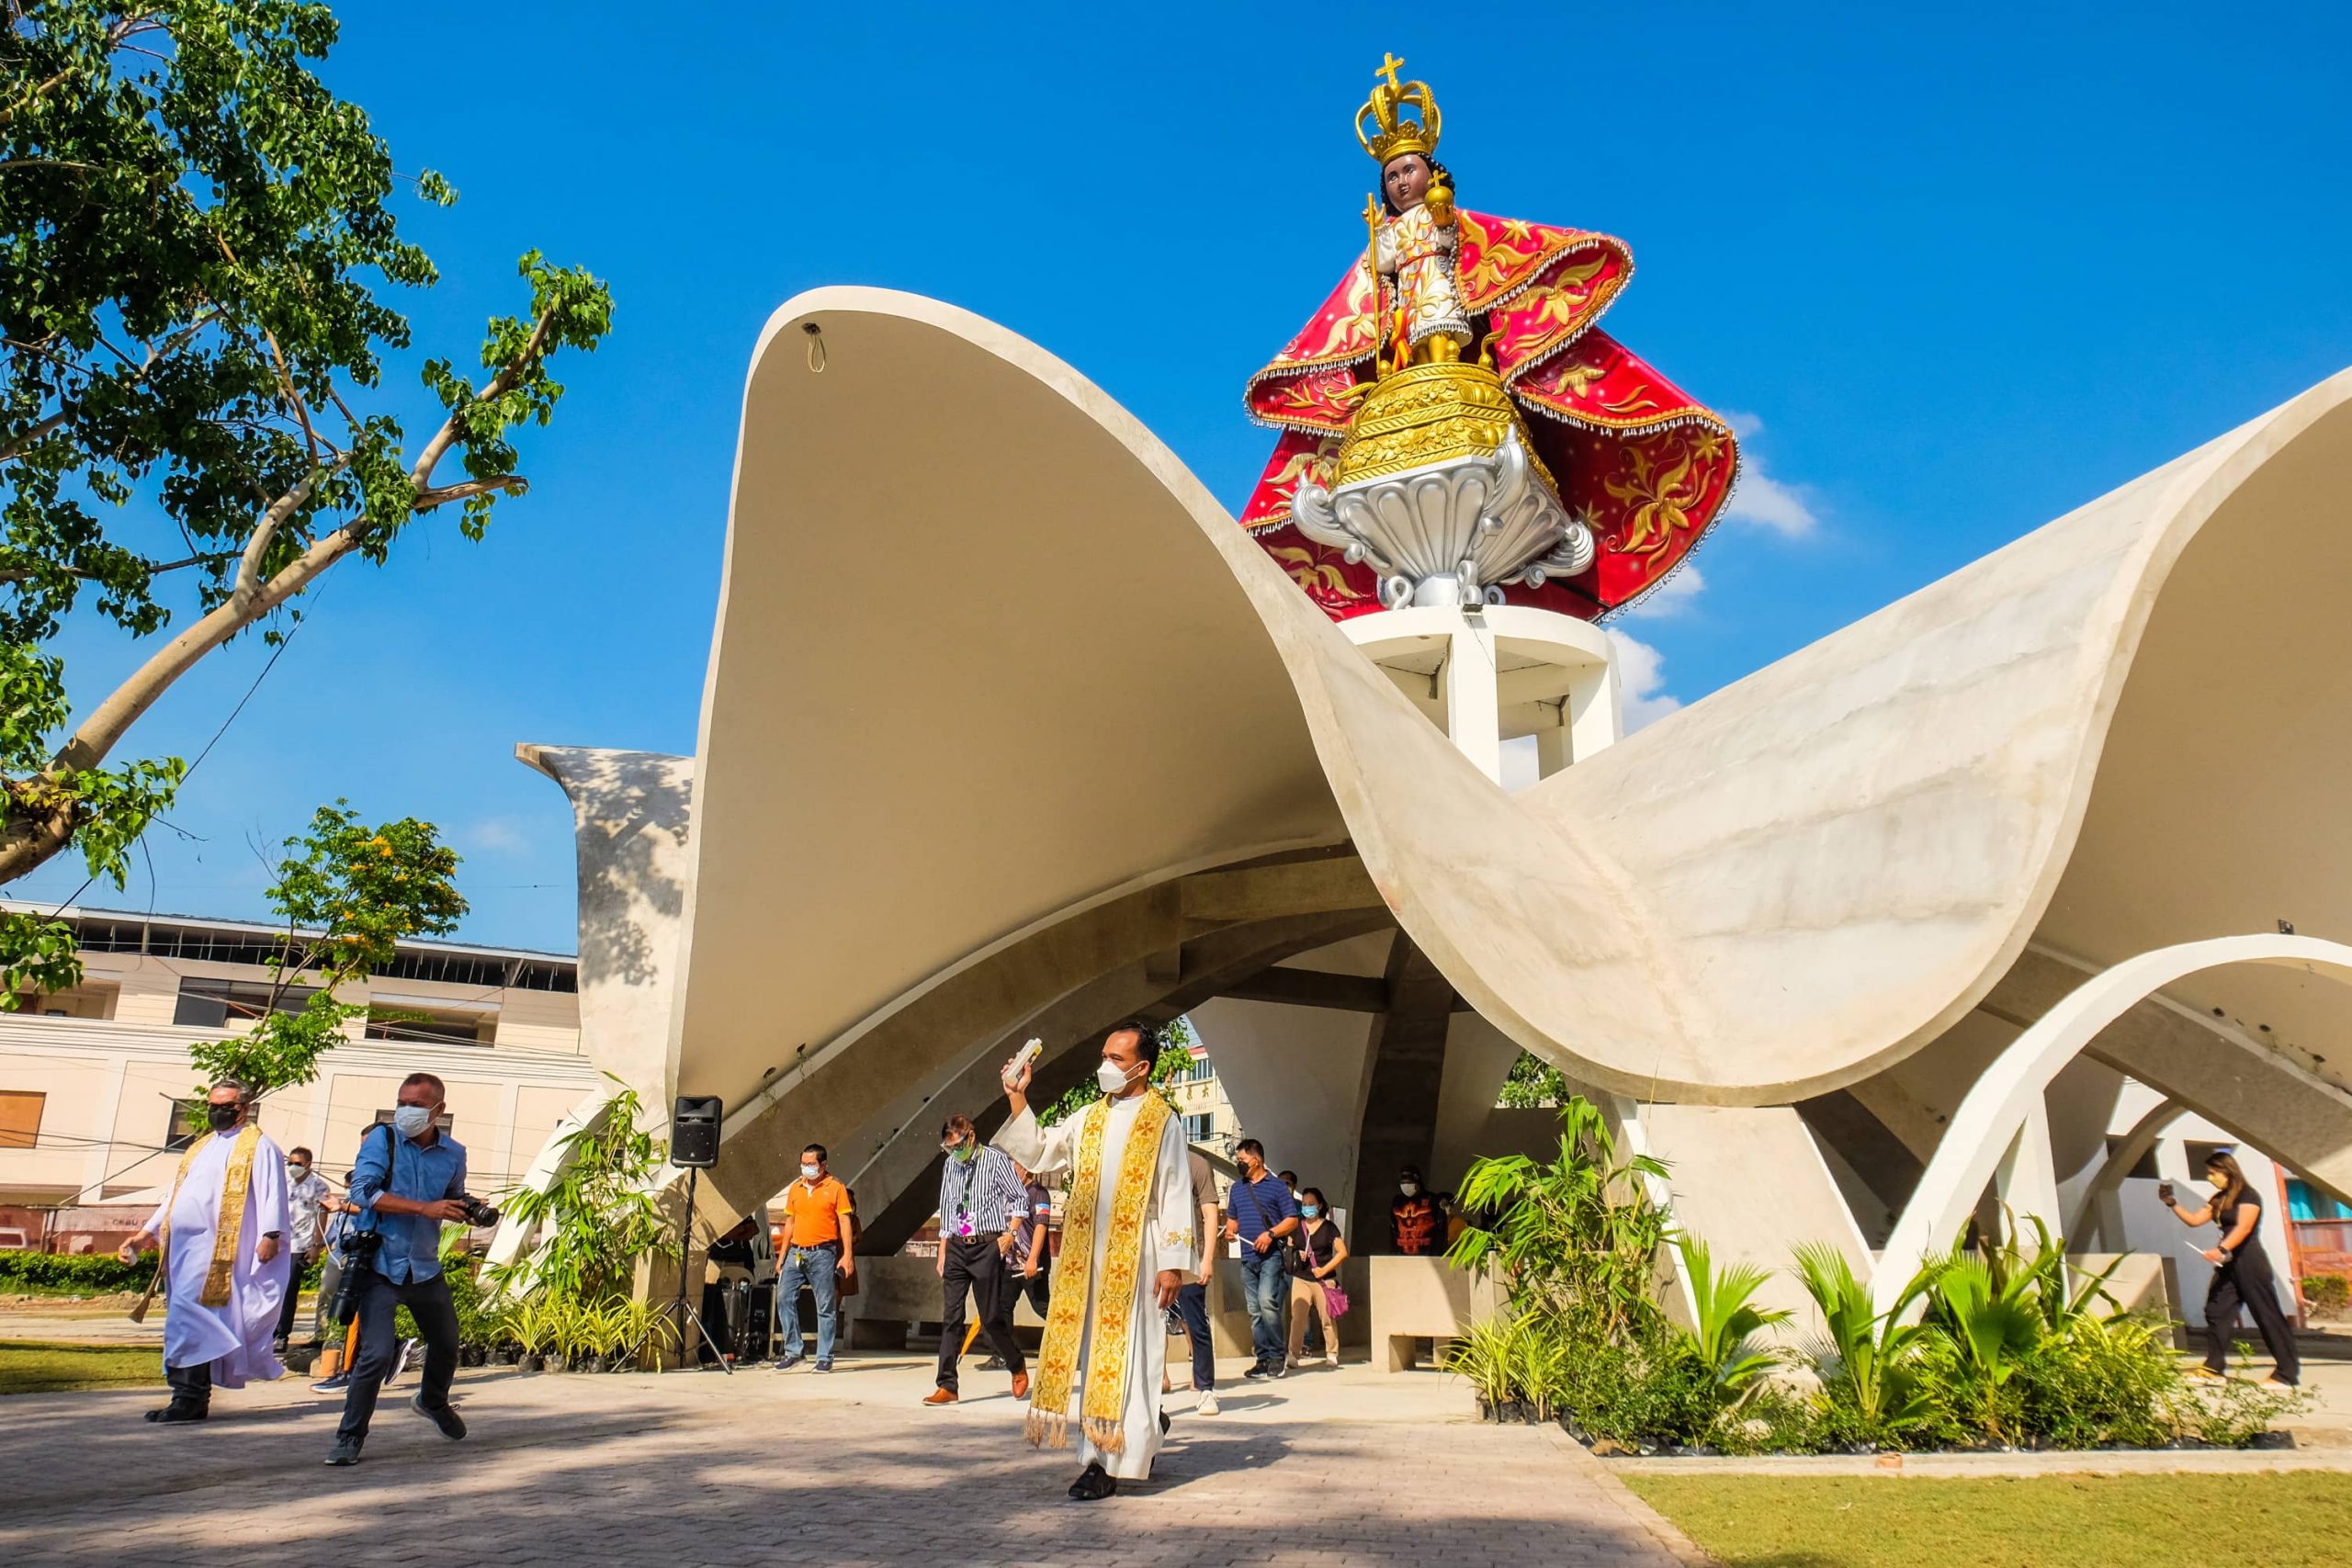 Grand Sto. Niño icon rises in Cebu City’s Senior Citizens’ Park